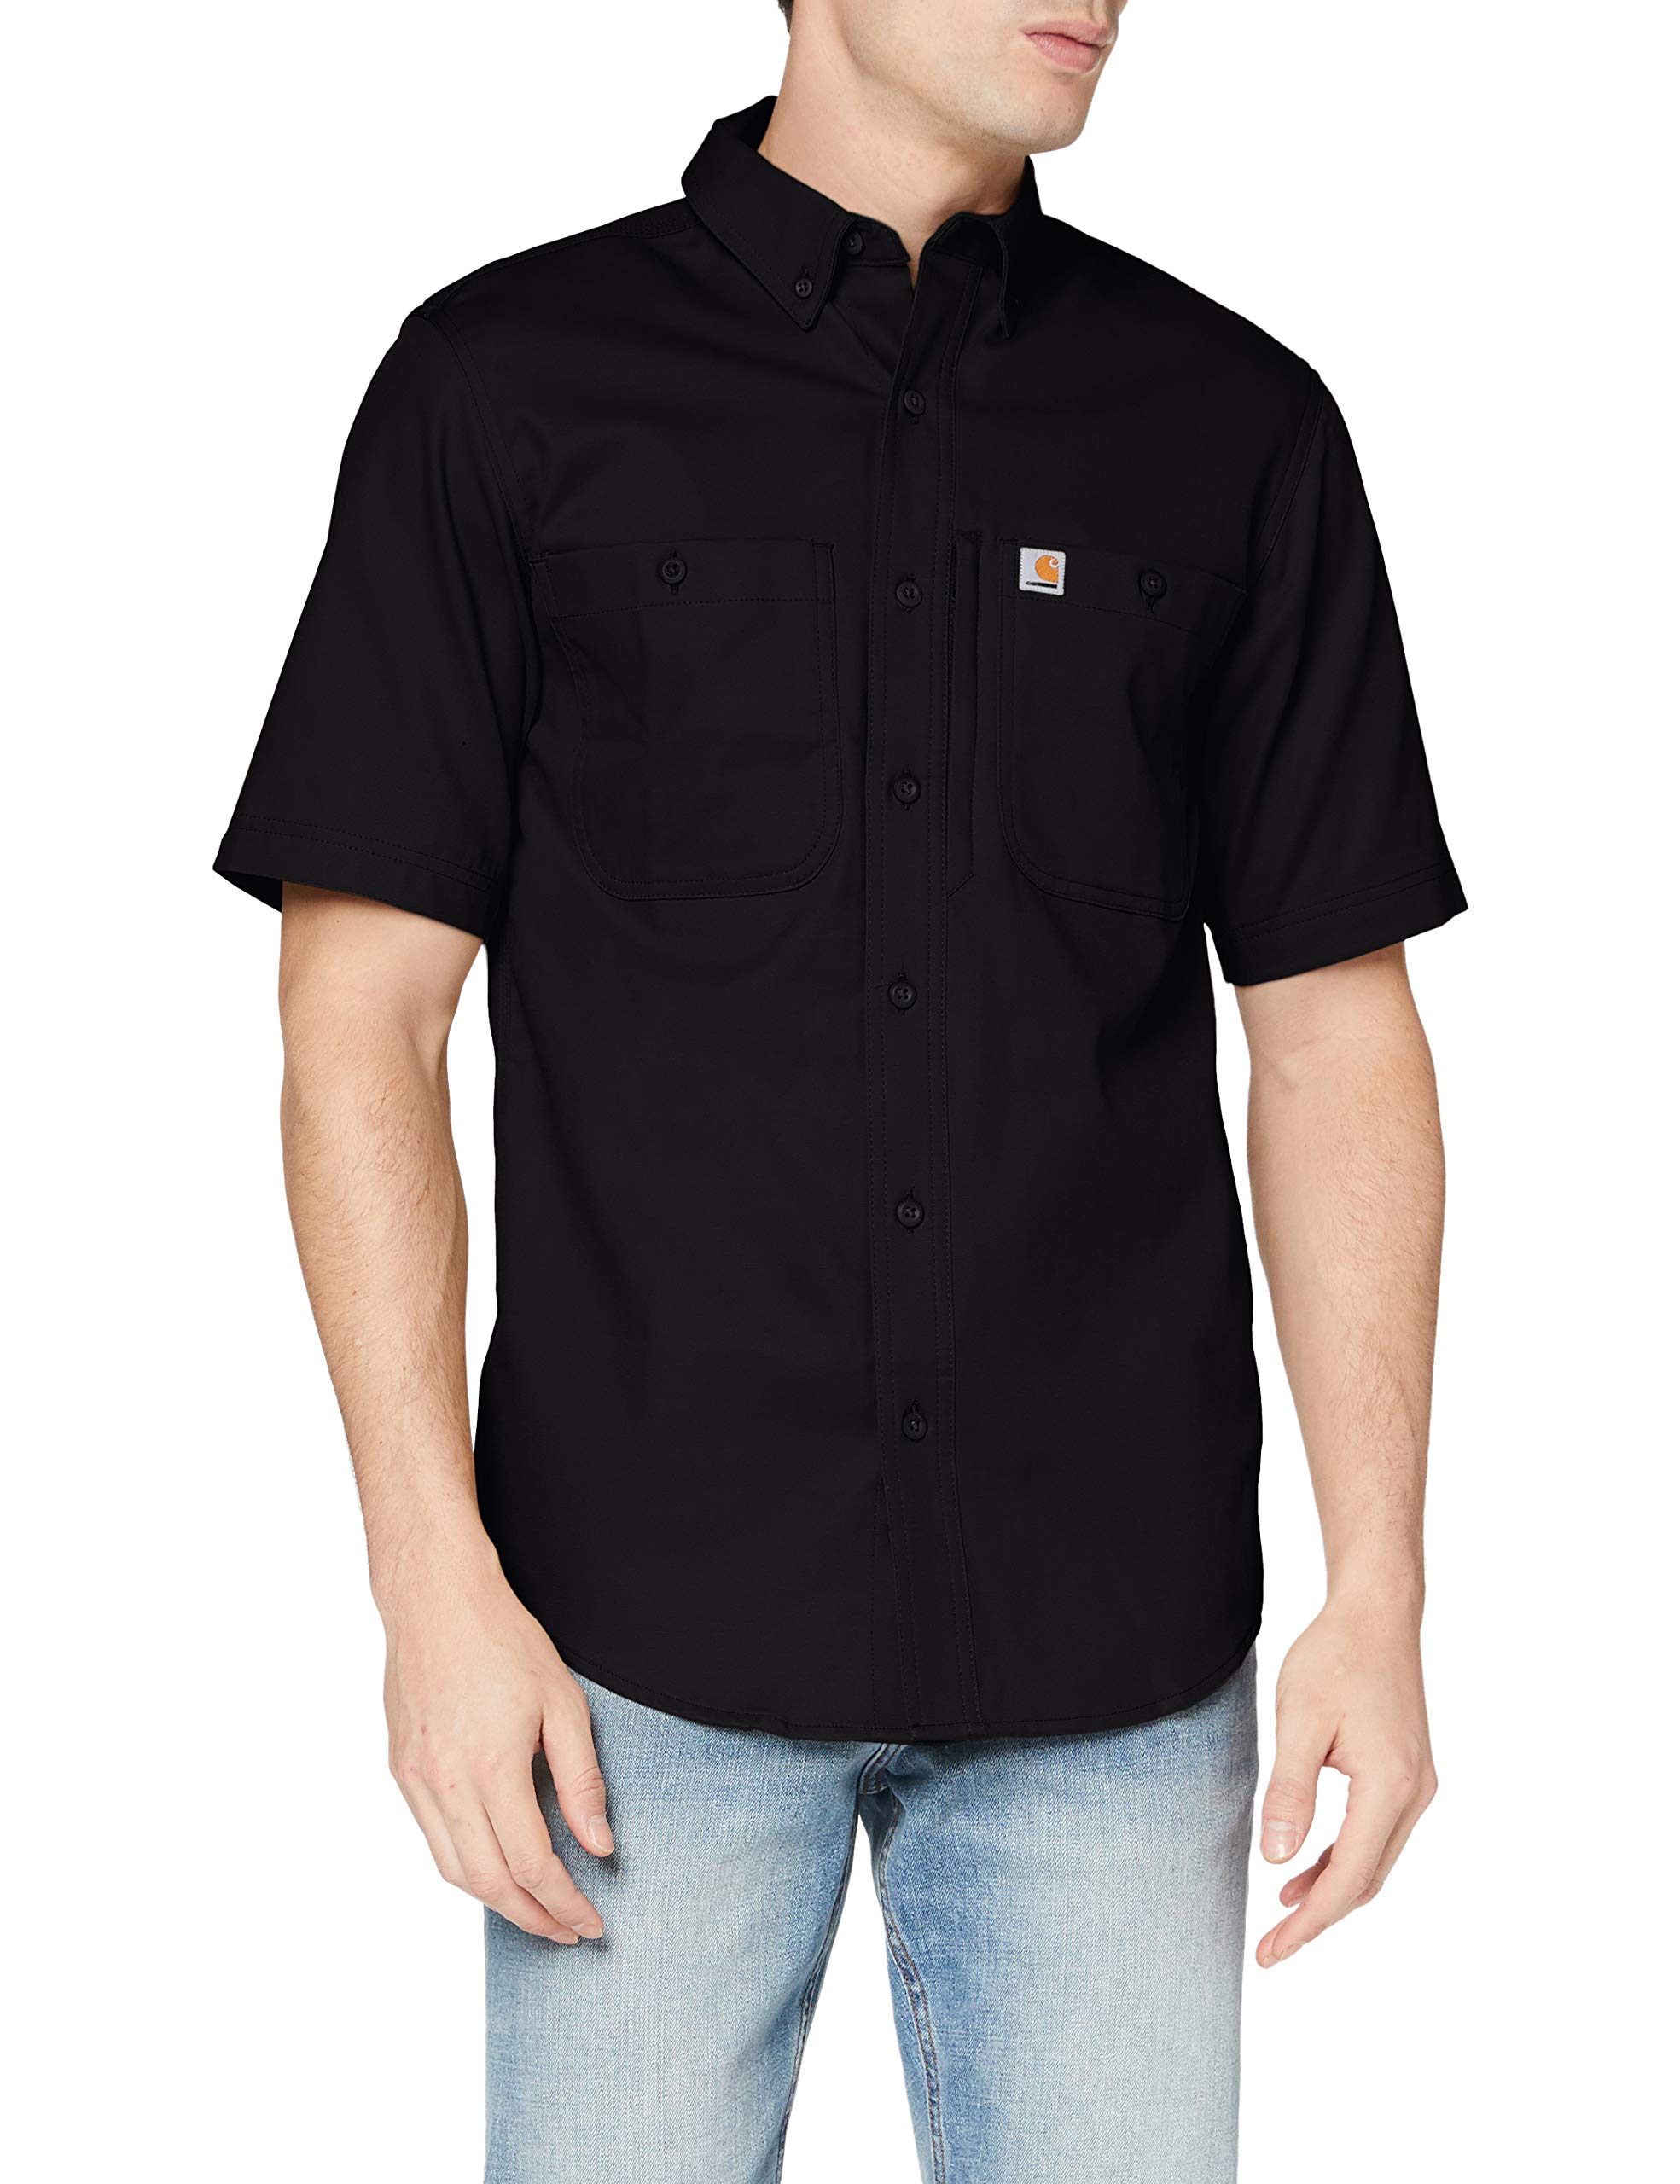 Carhartt Men's Rugged Professional Short Sleeve Work Shirt, Black, 2X-Large 